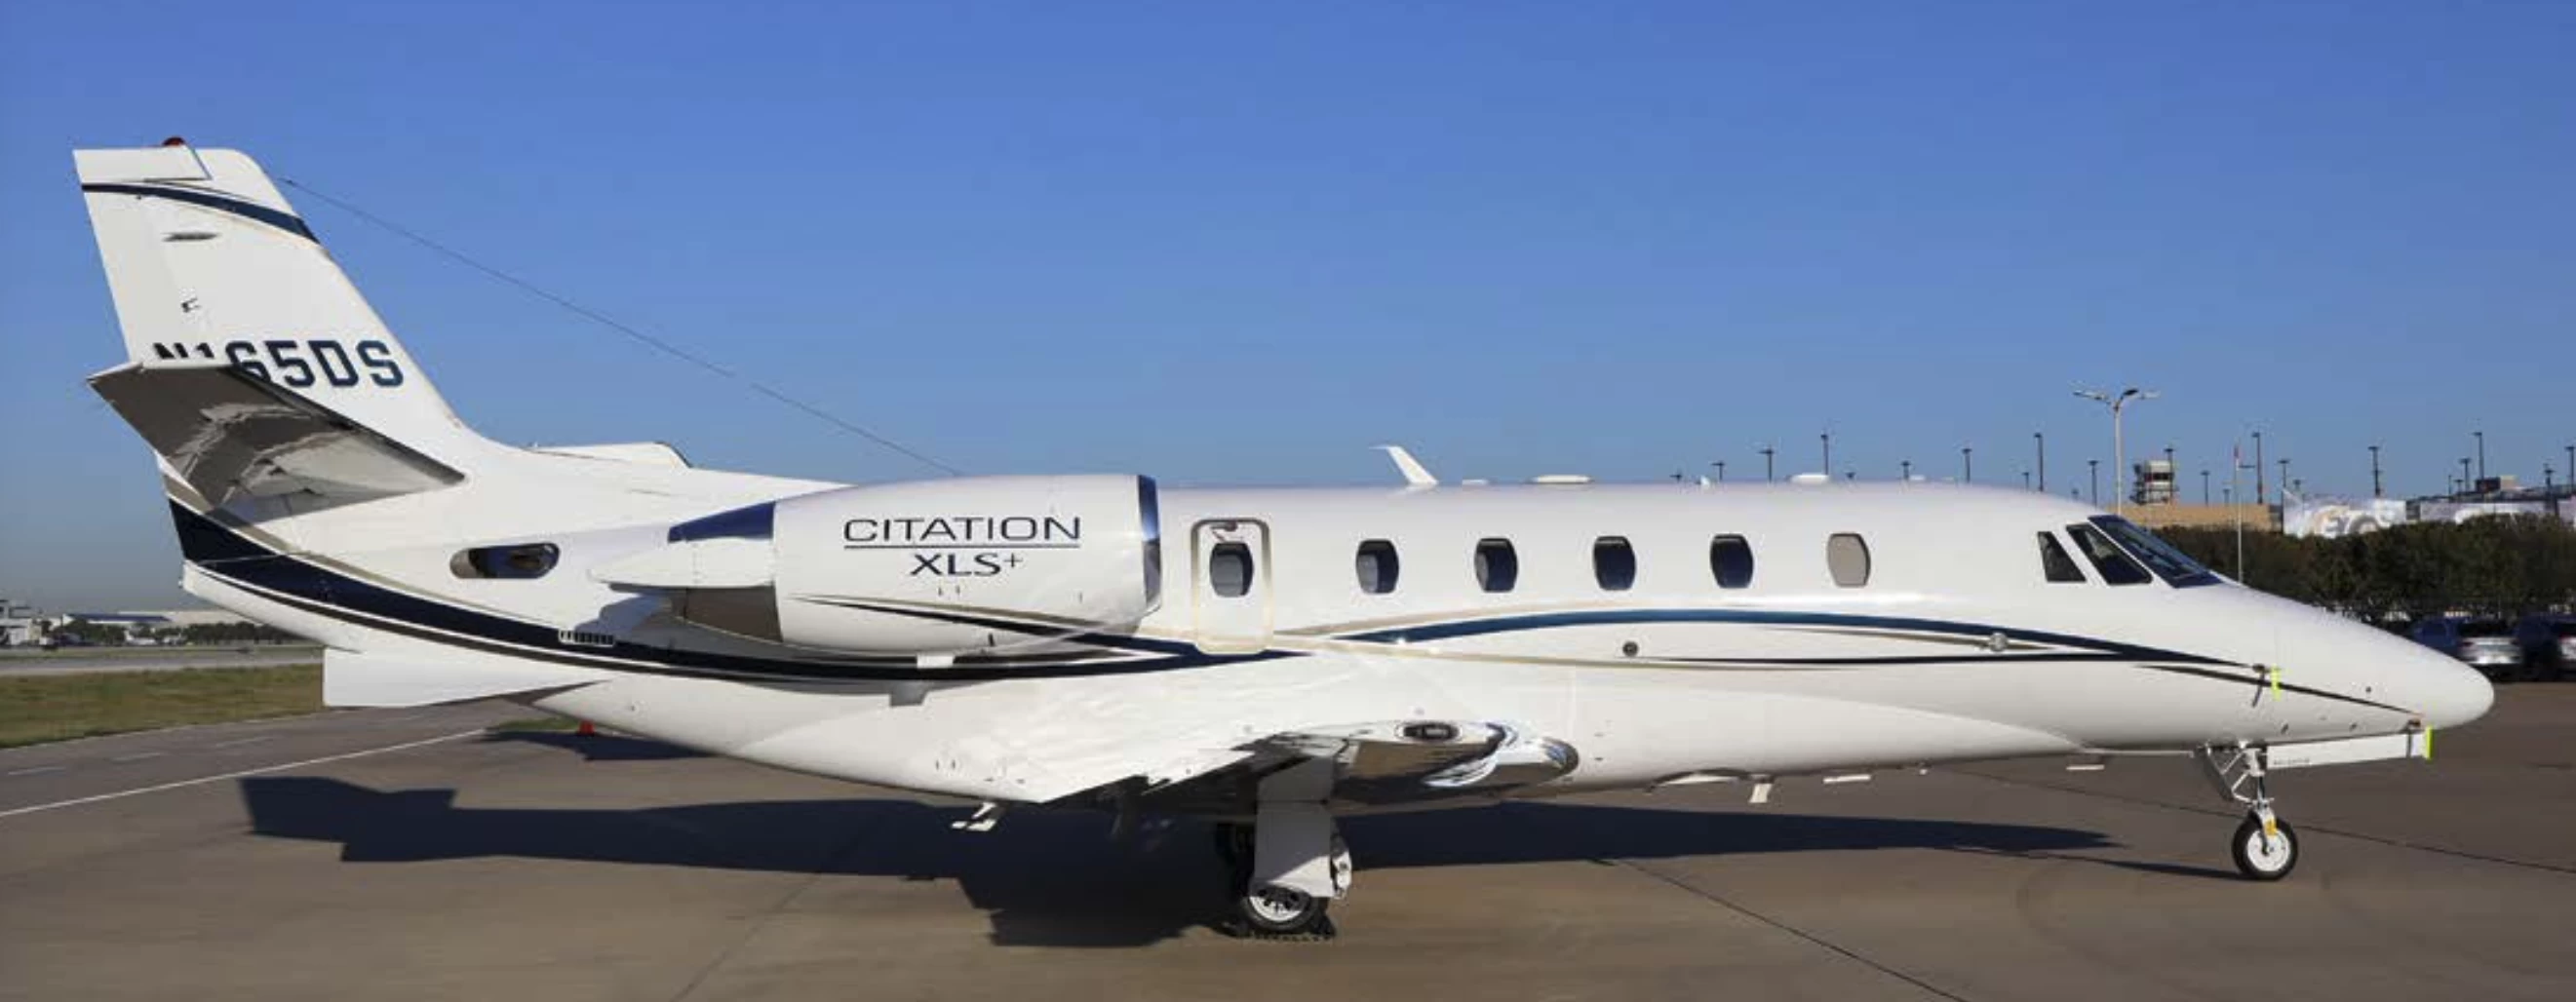 Citation XLS+ 2014 Aircraft Image Main